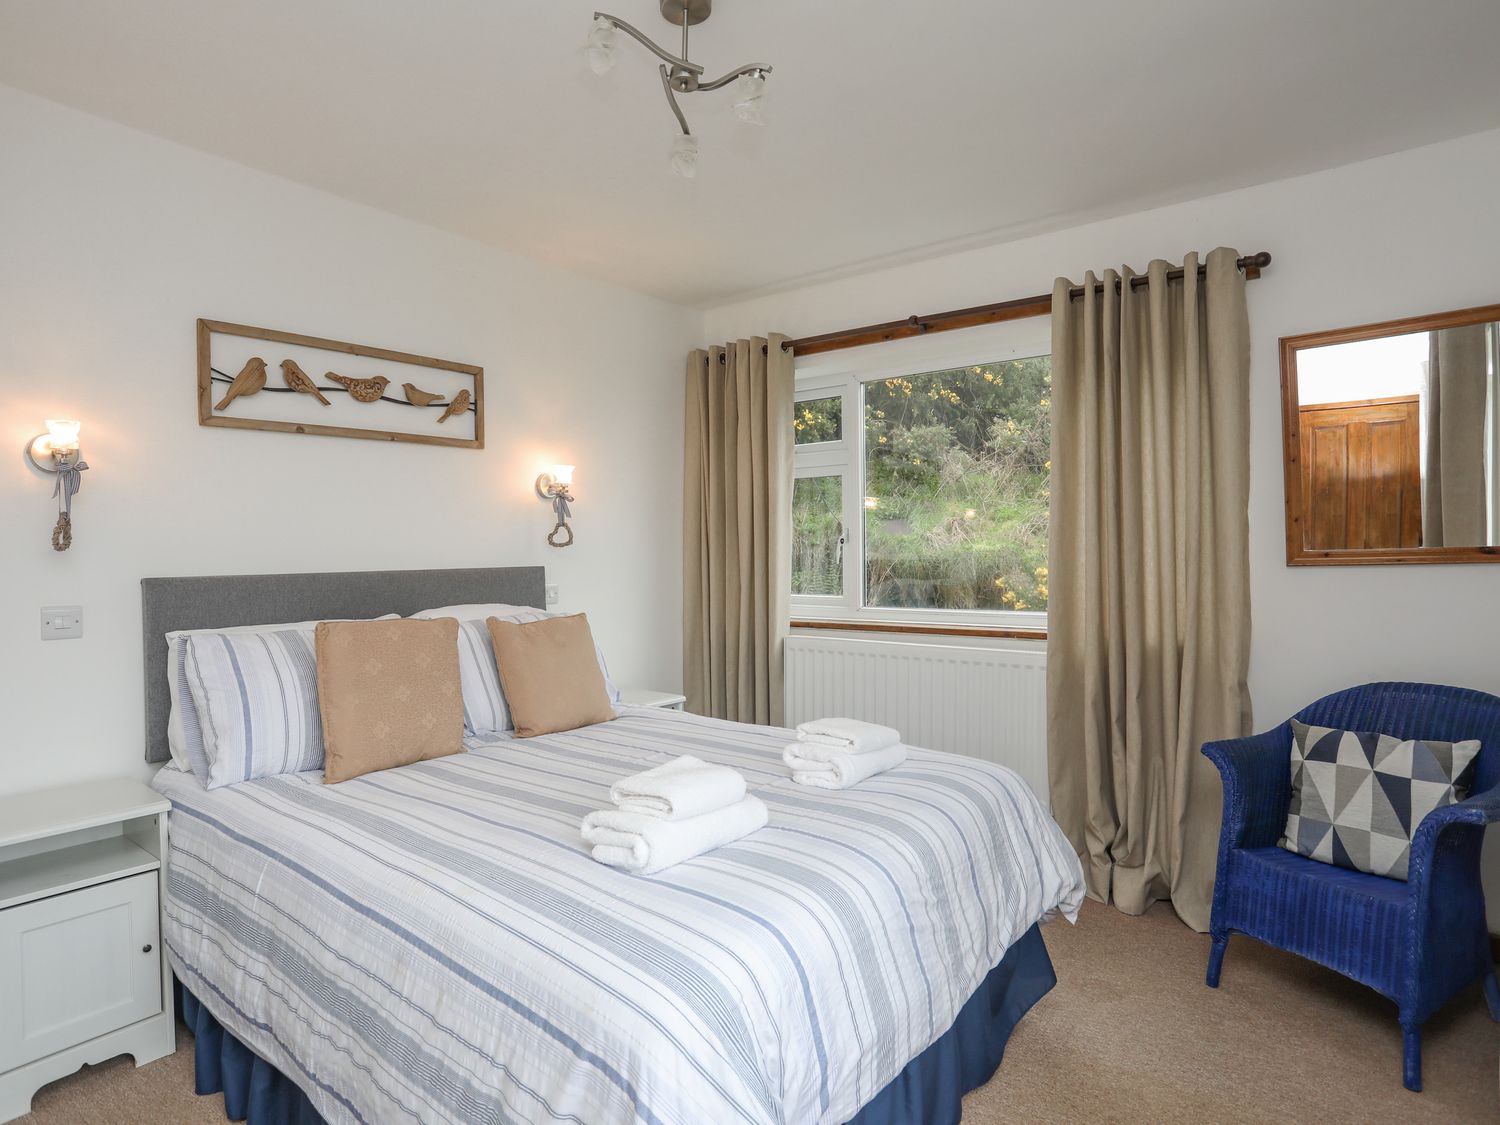 Cottage in Cilan near Abersoch, Gwynedd sleeps four guests in two bedrooms. Pet-friendly with garden